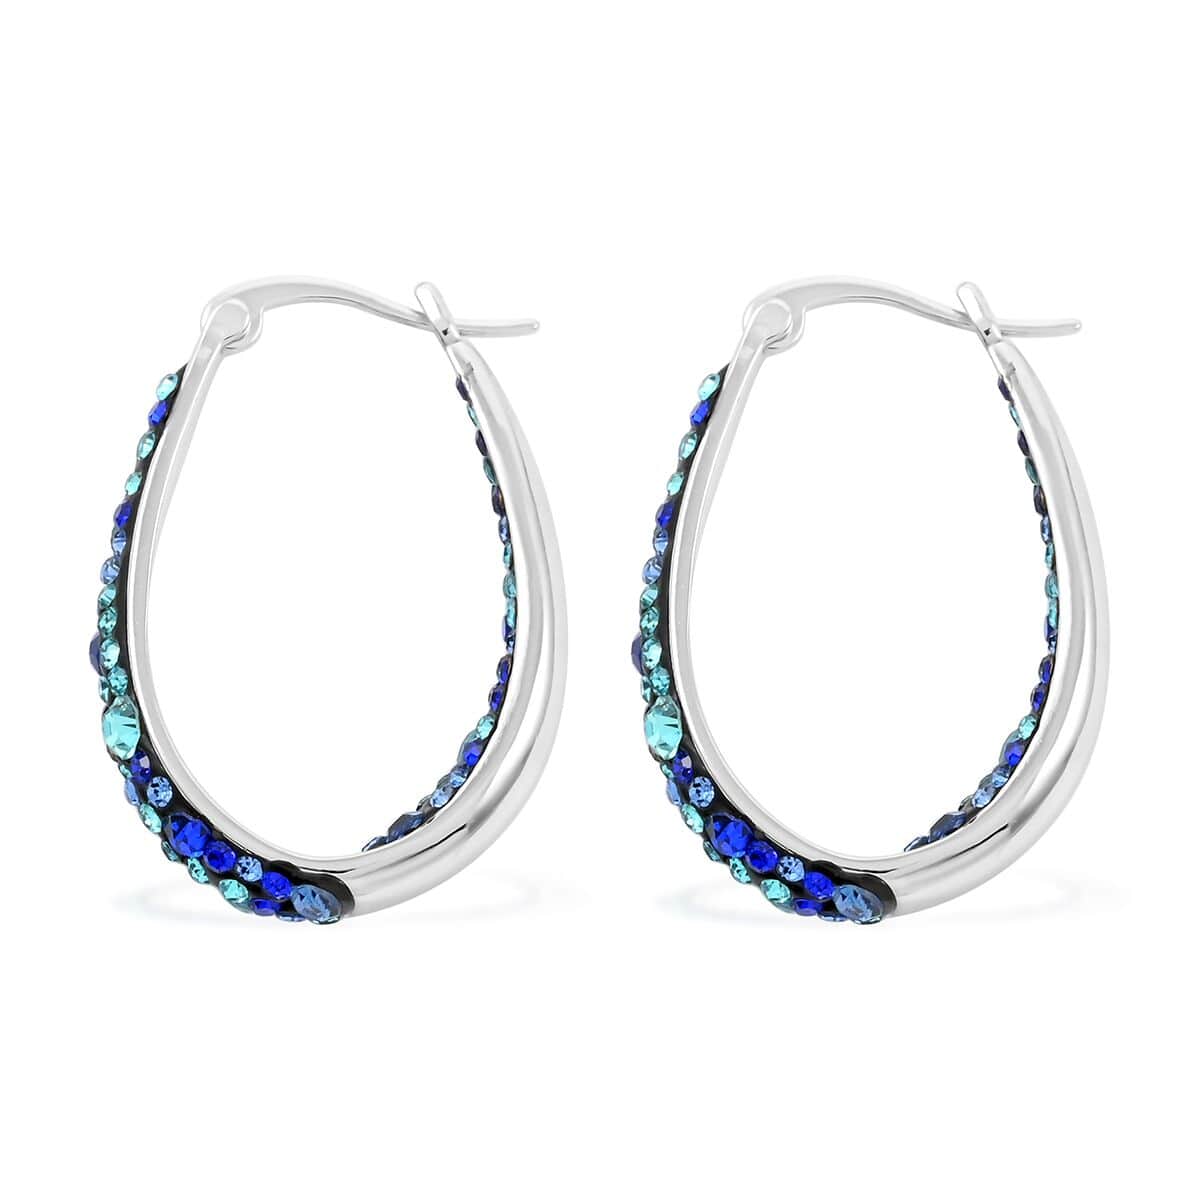 Austrian Peacock Crystal Earrings in Silvertone, Inside Out Hoops For Women image number 3